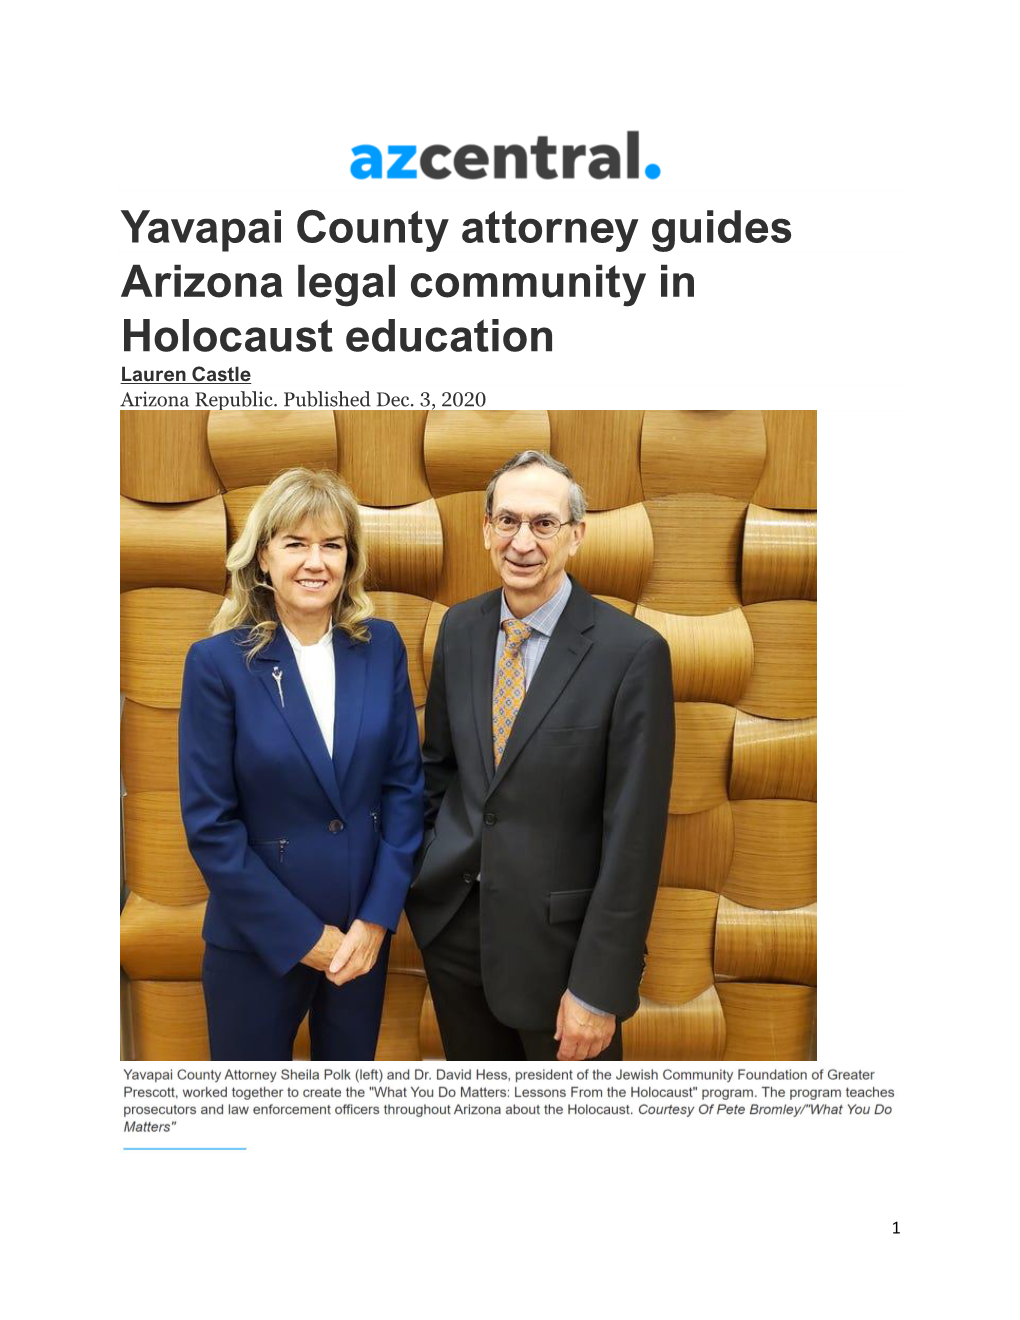 Yavapai County Attorney Guides Arizona Legal Community in Holocaust Education Lauren Castle Arizona Republic